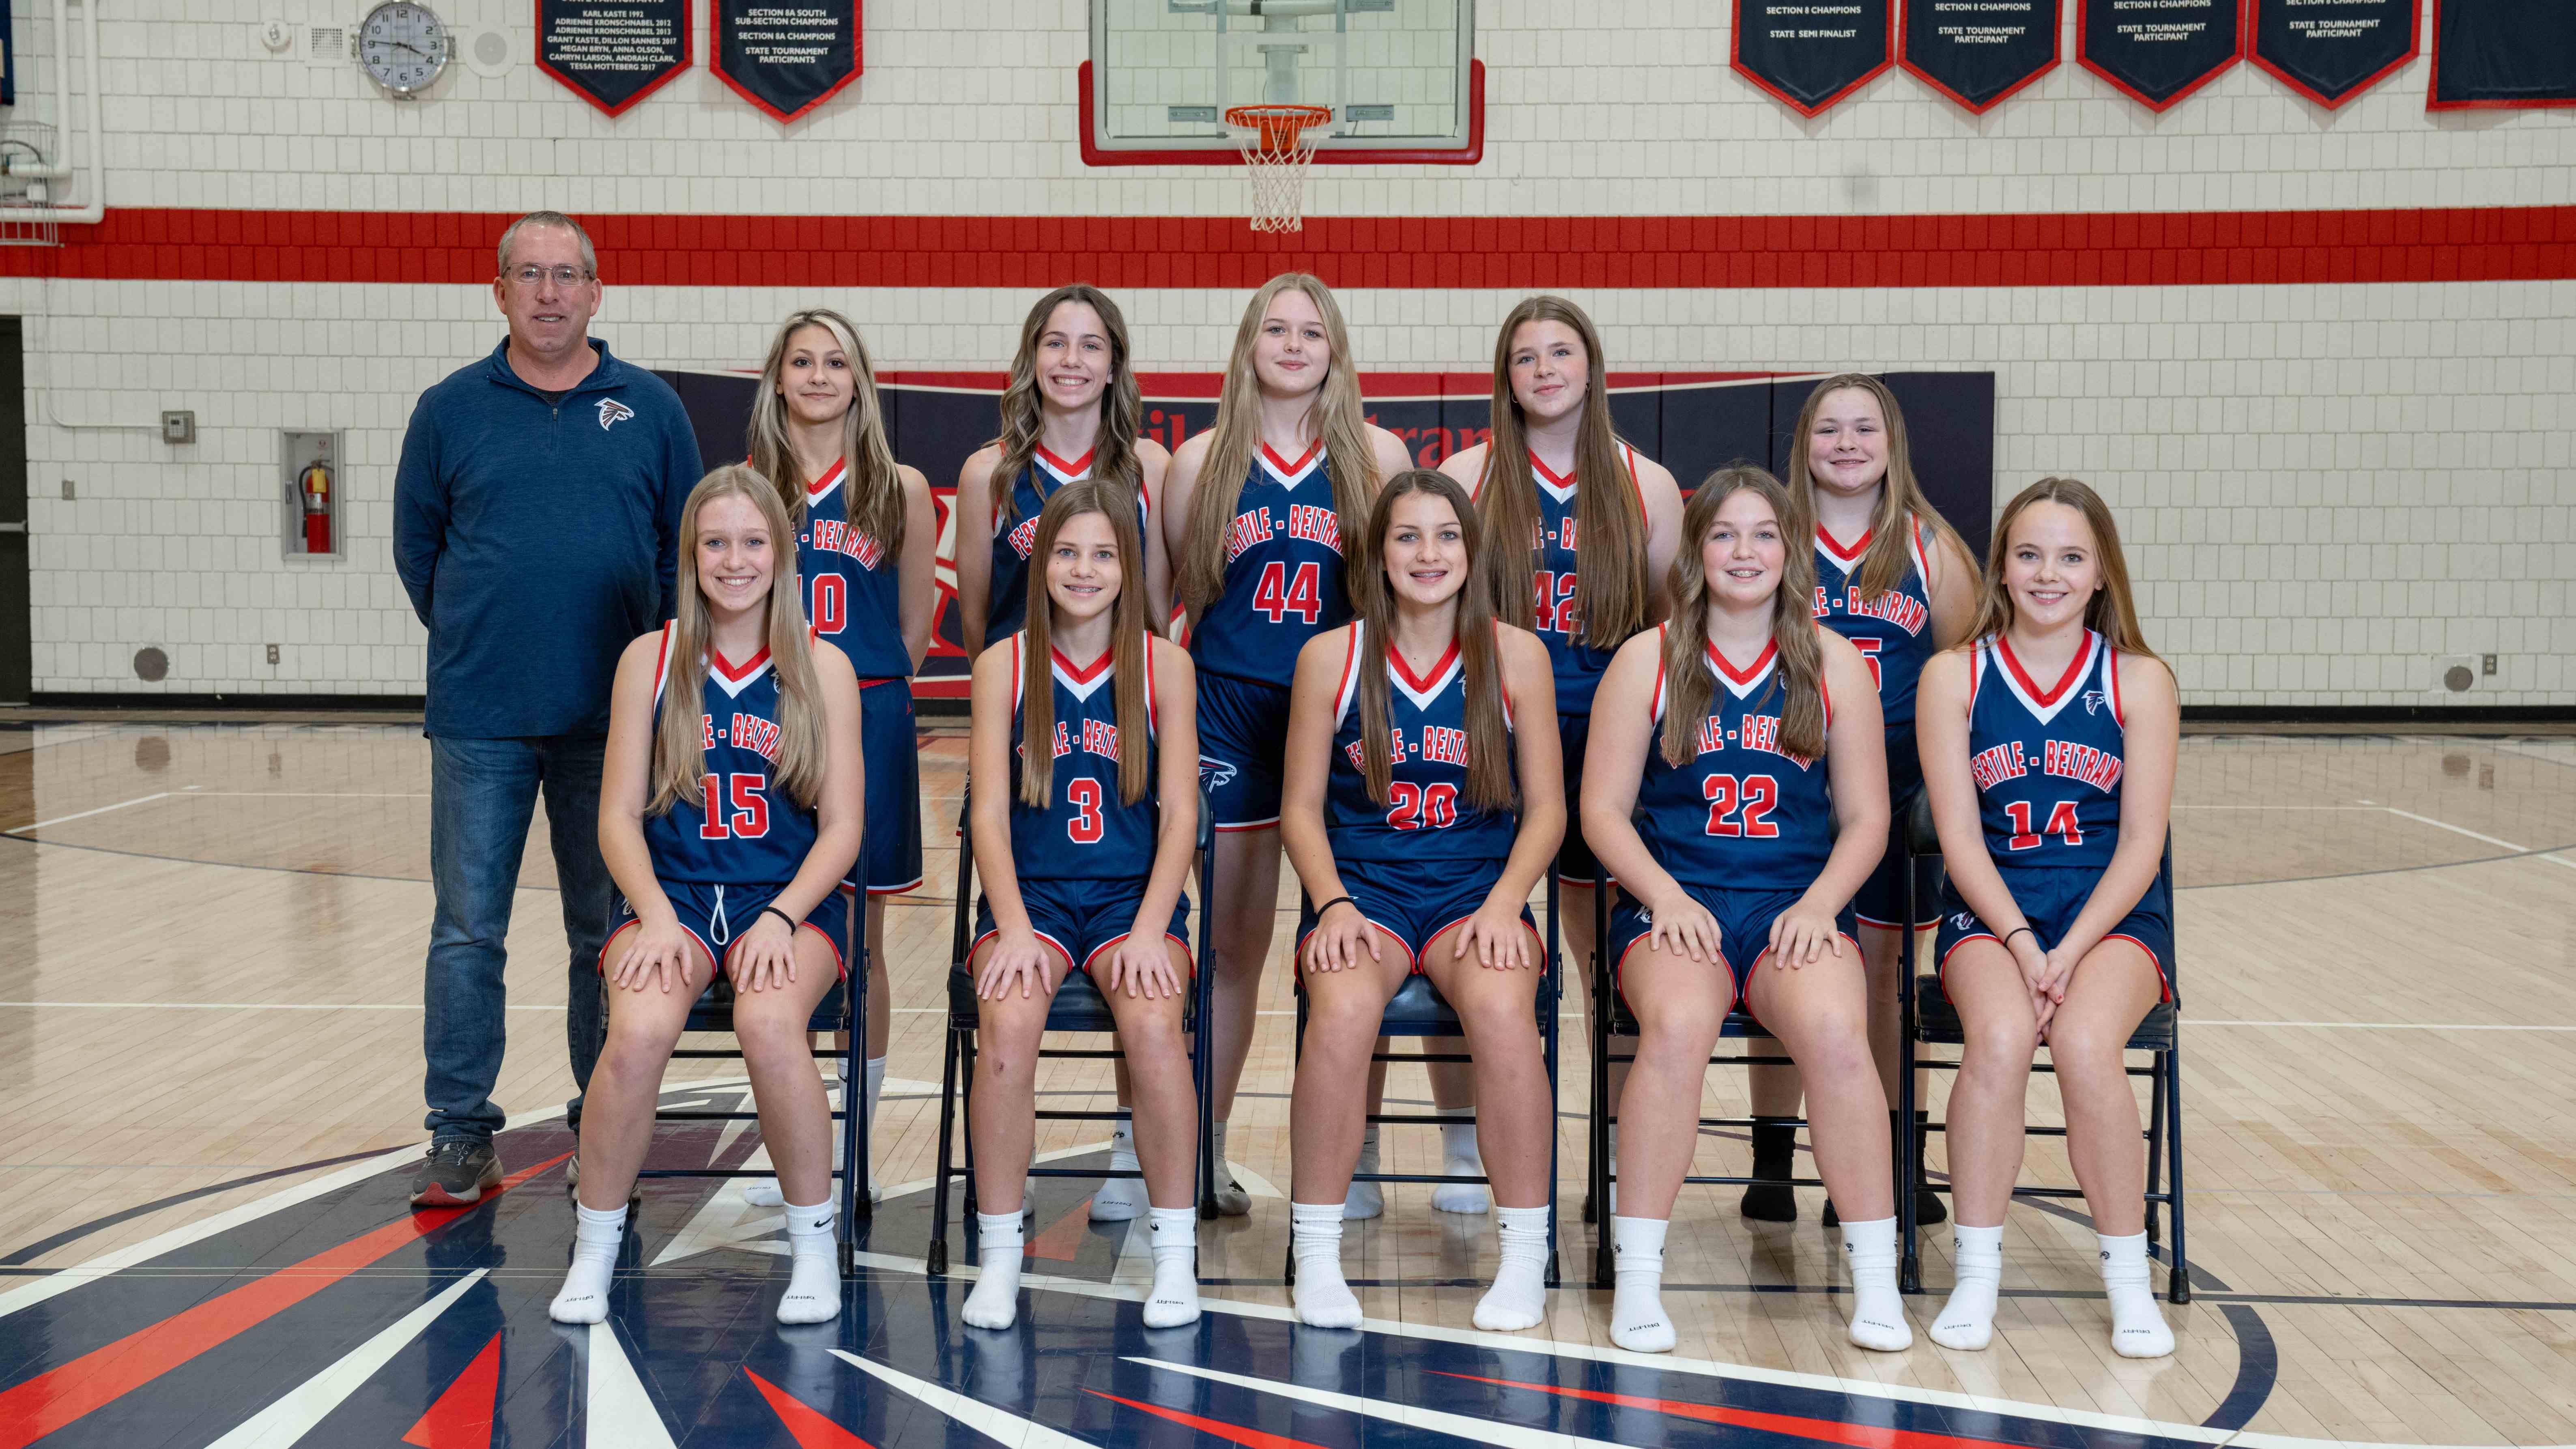 8th Grade girls basketball team